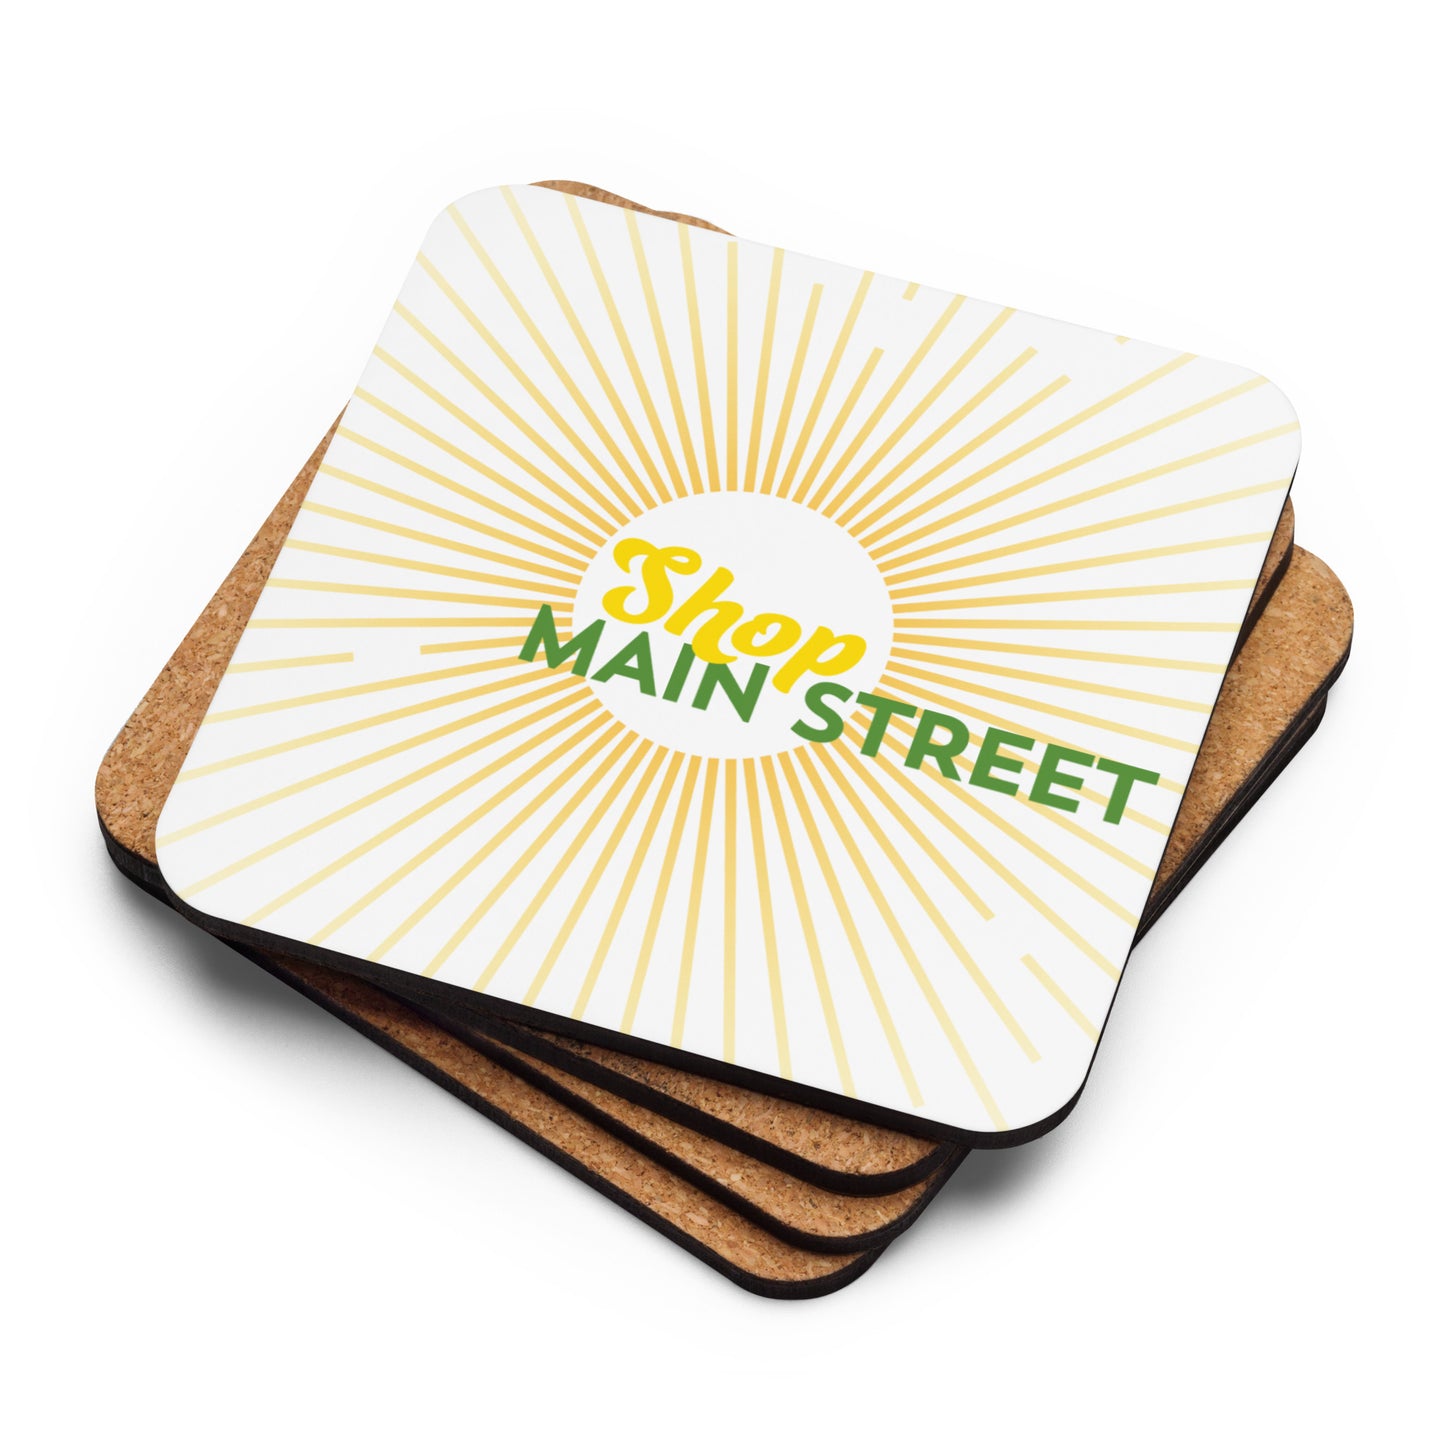 "Shop Main Street" (Yellow and Green) Cork-back Coaster